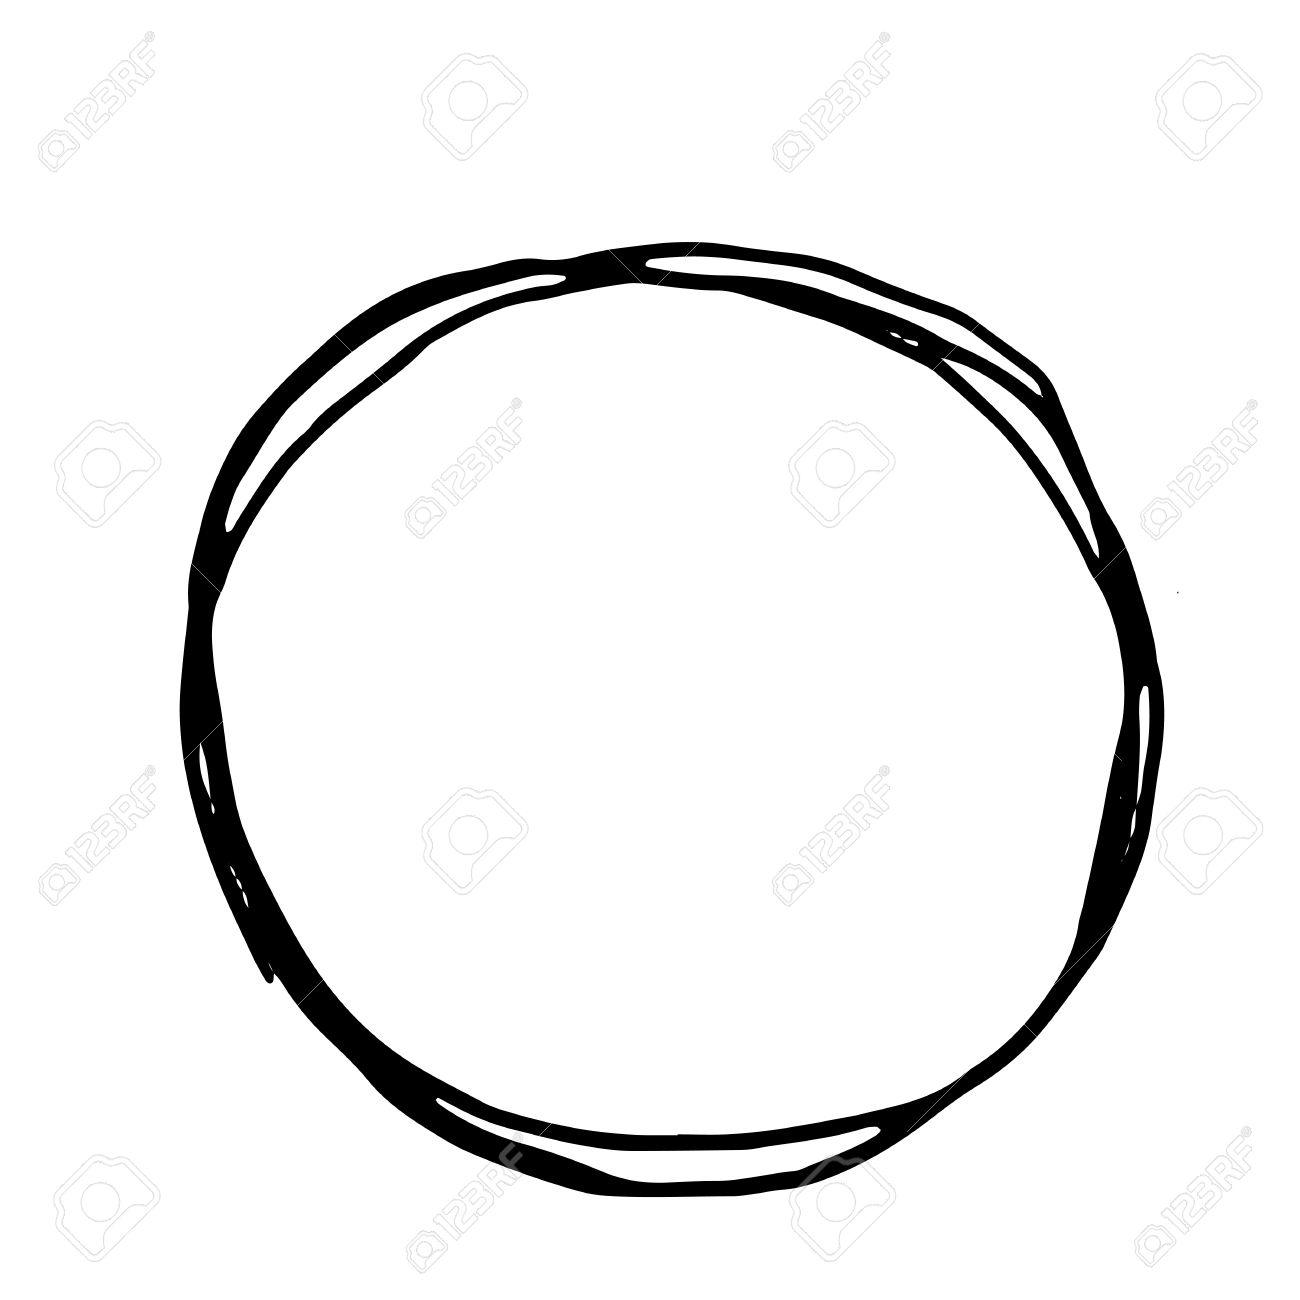 circle clipart drawn